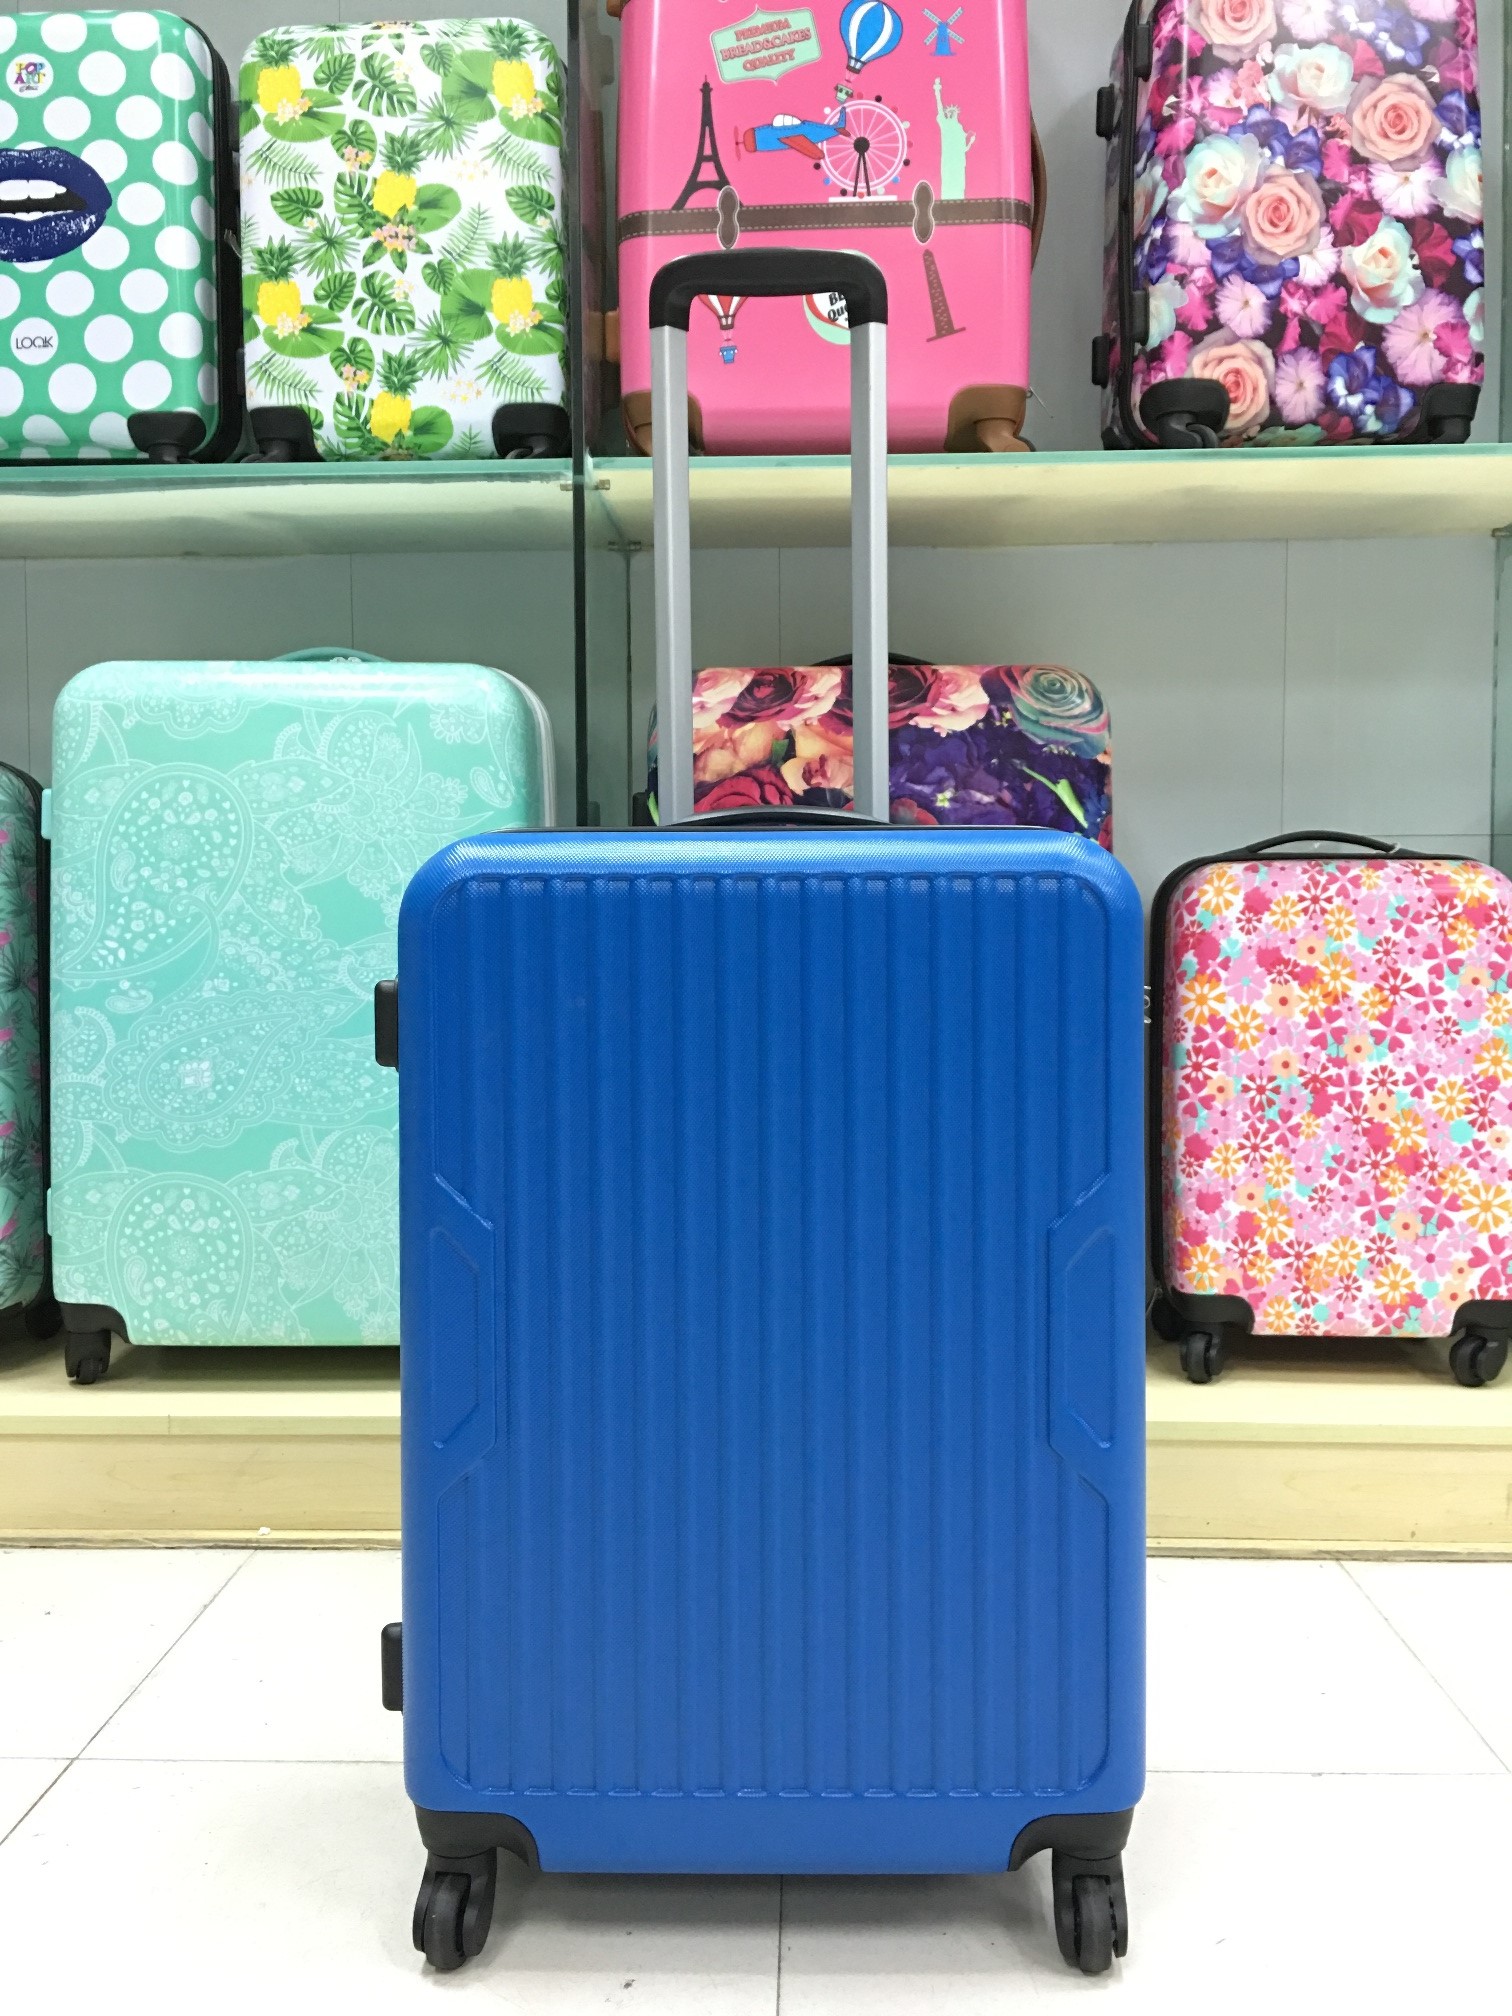 yanteng 4 wheel suitcase in blue color 